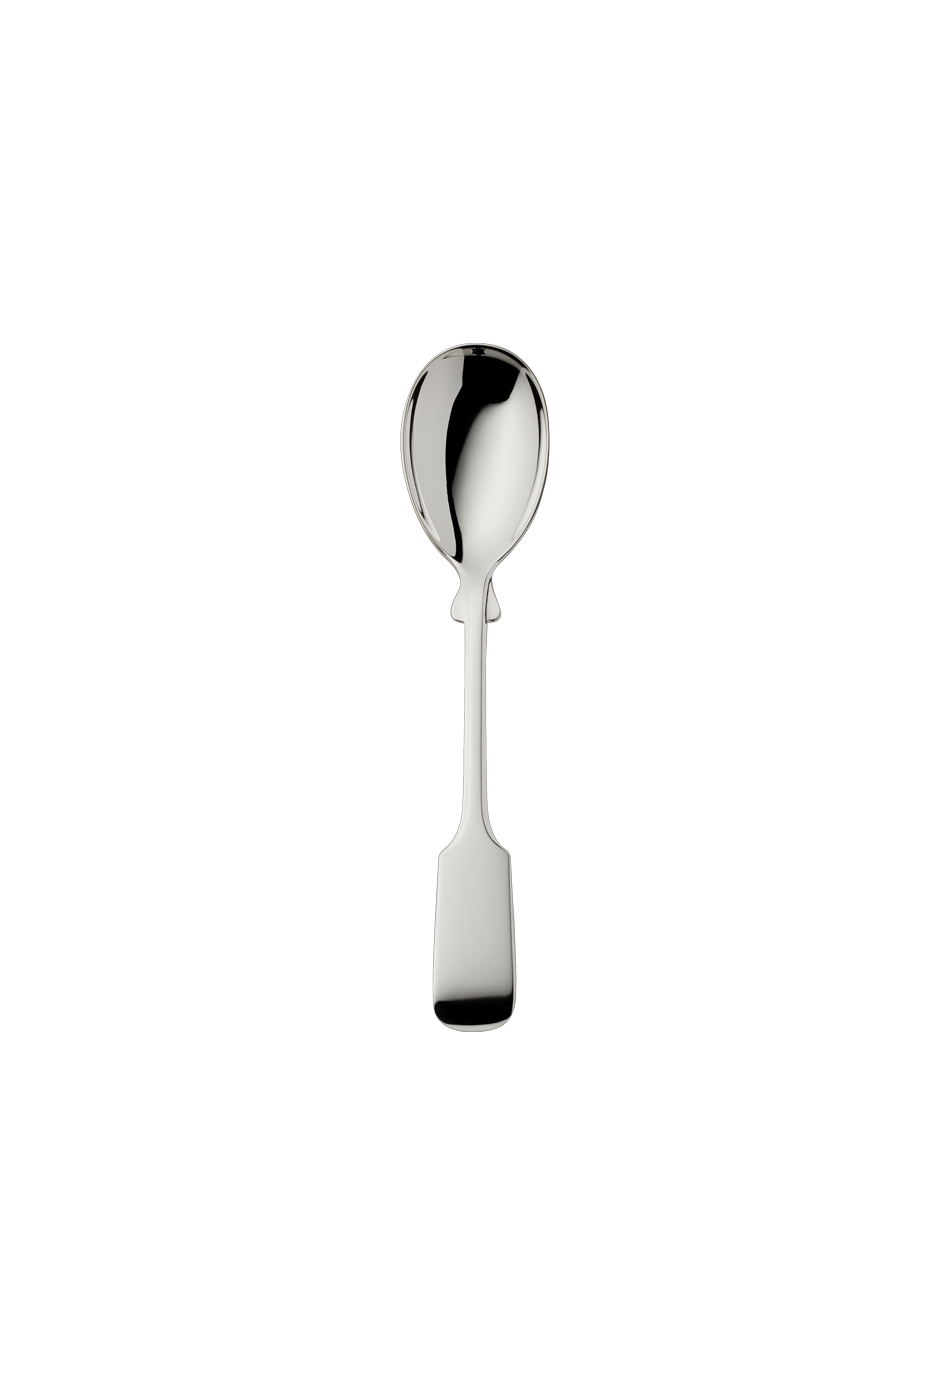 Alt-Spaten Ice-Cream Spoon (150g massive silverplated)